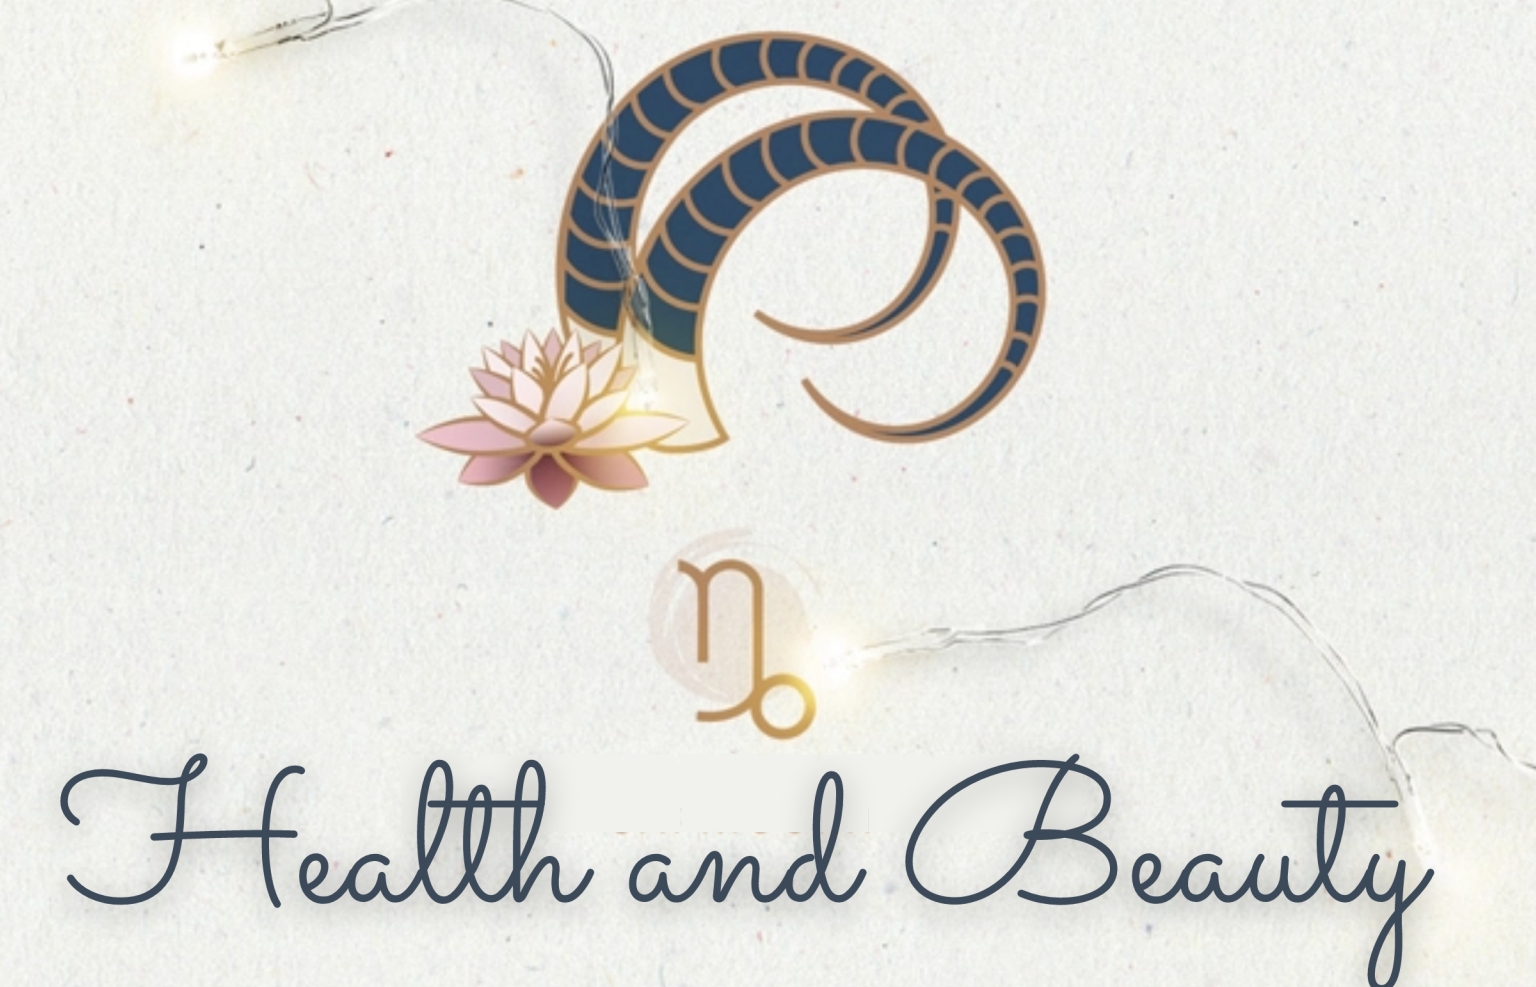 capricorn horoscope astrological predictions for beauty health